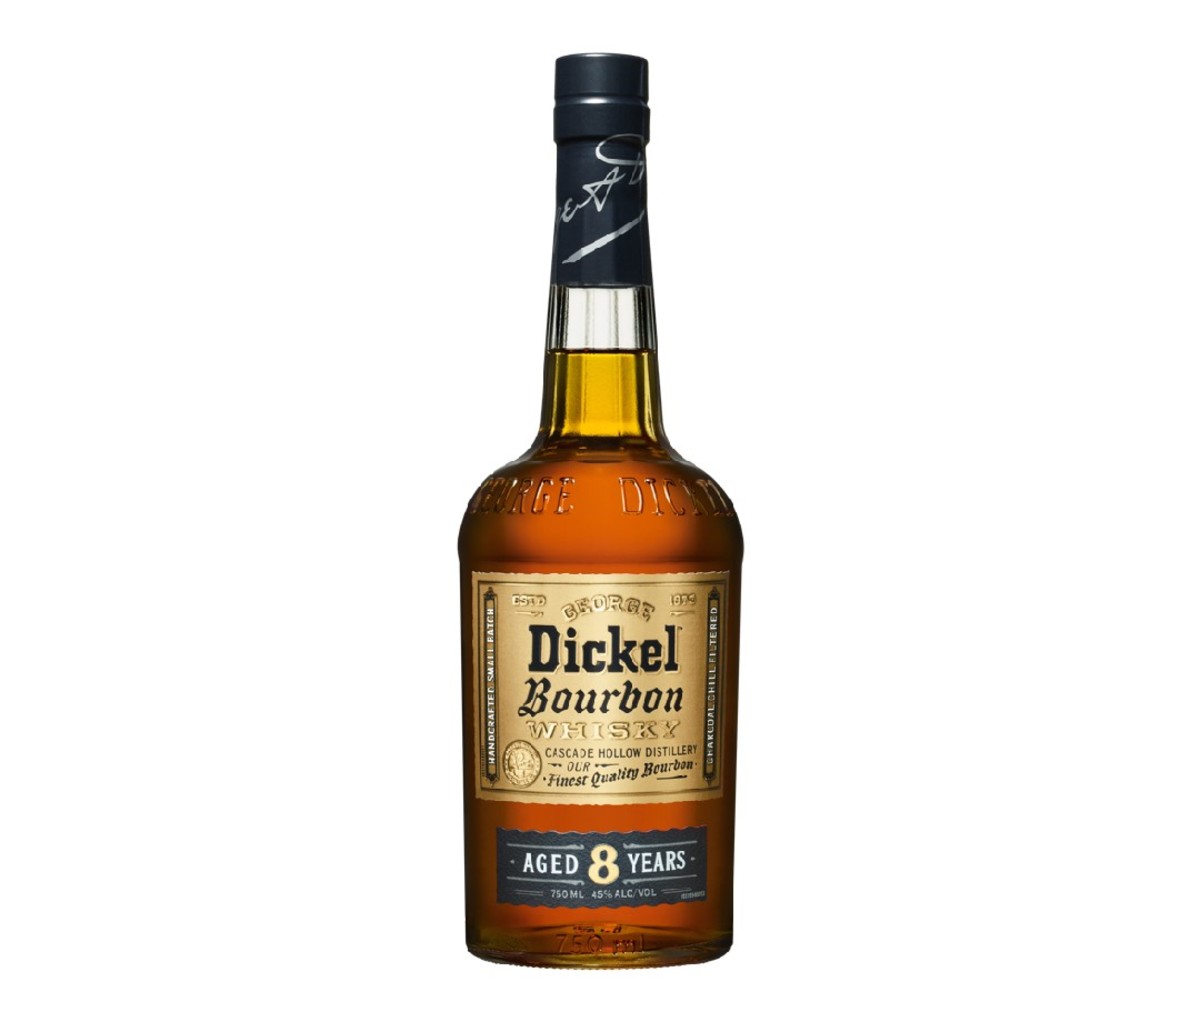 Bottle of Dickel Bourbon